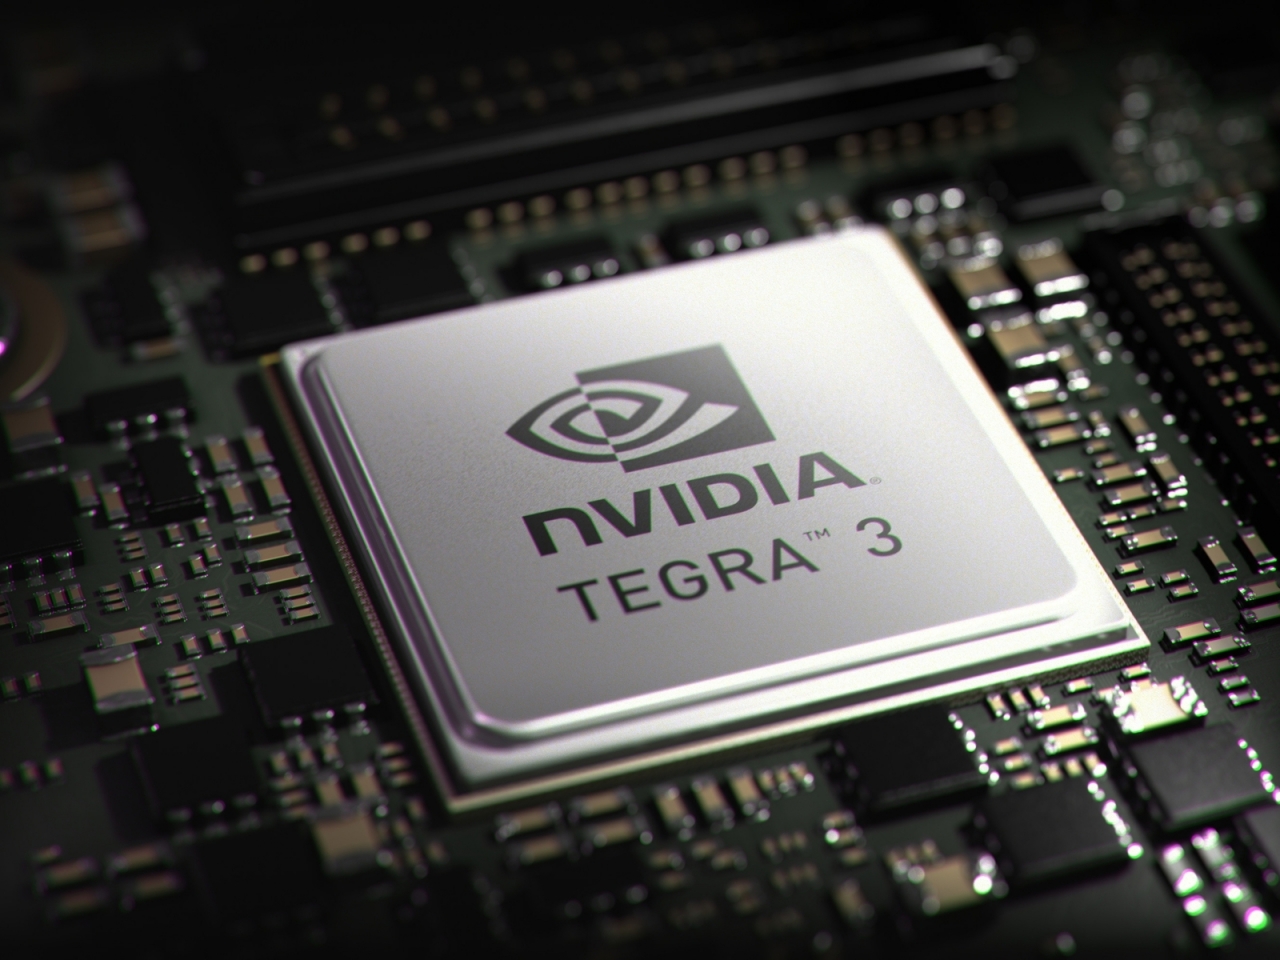 nVidia Tegra 3 for 1280 x 960 resolution